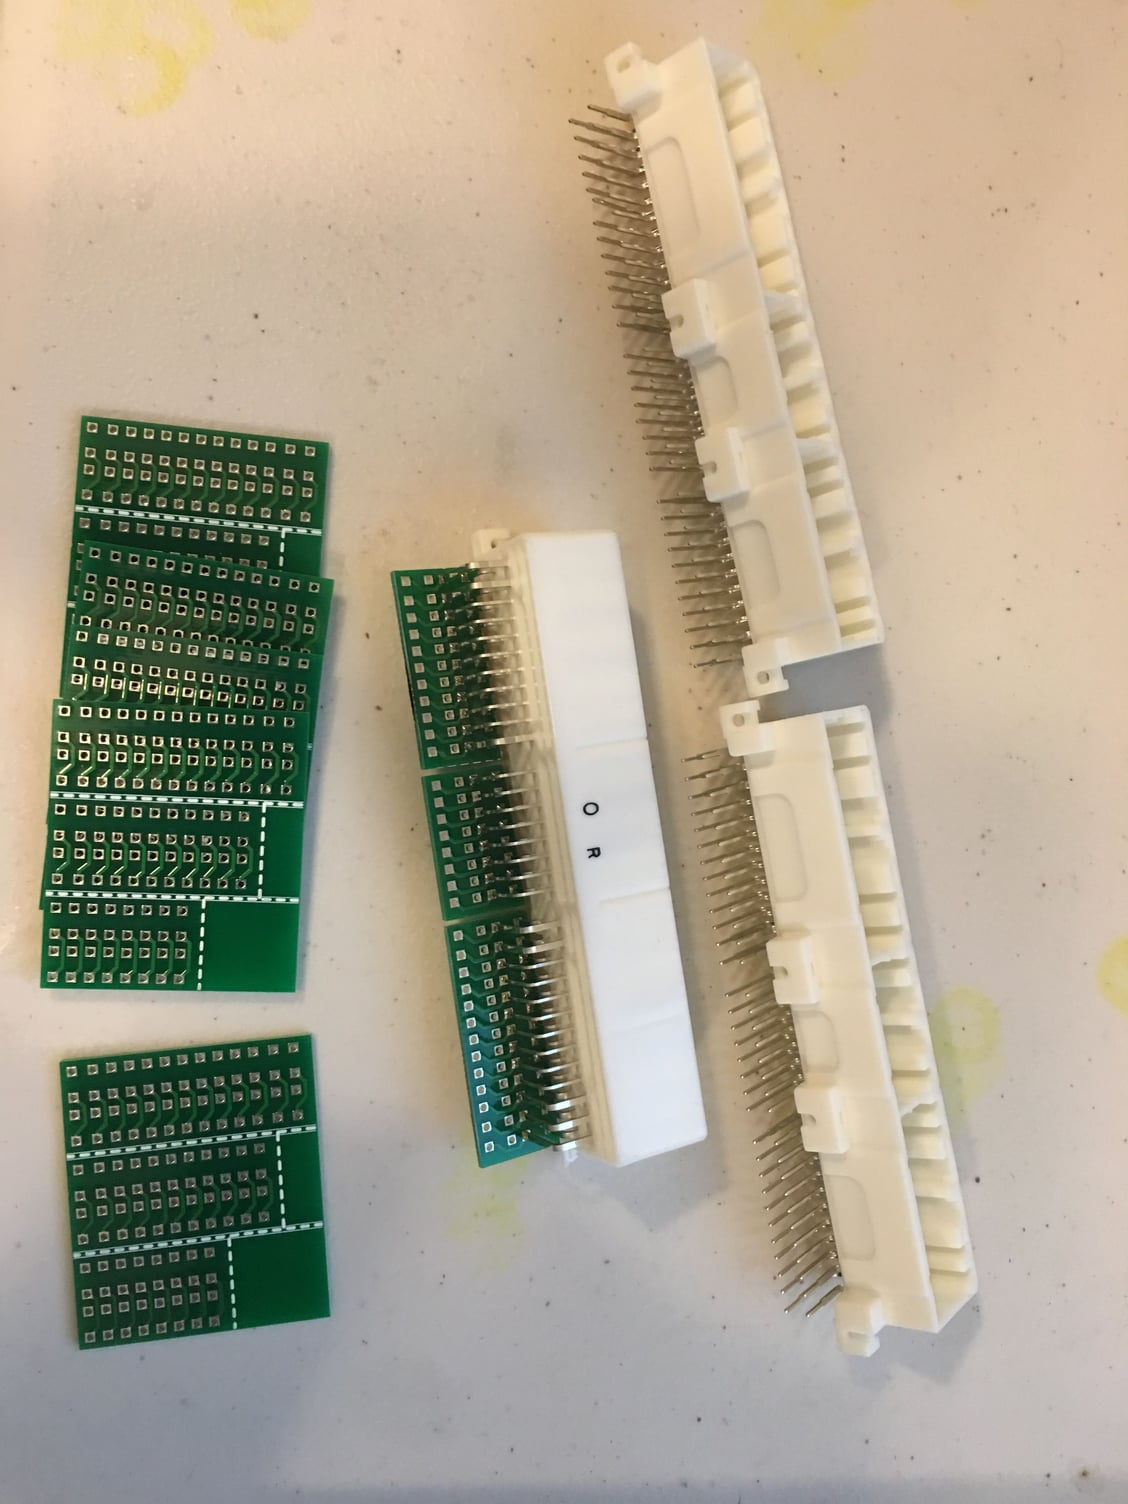 64 pin ECU connector ONLY breakout PCB civic mazda mx-5 eunos miata toyota